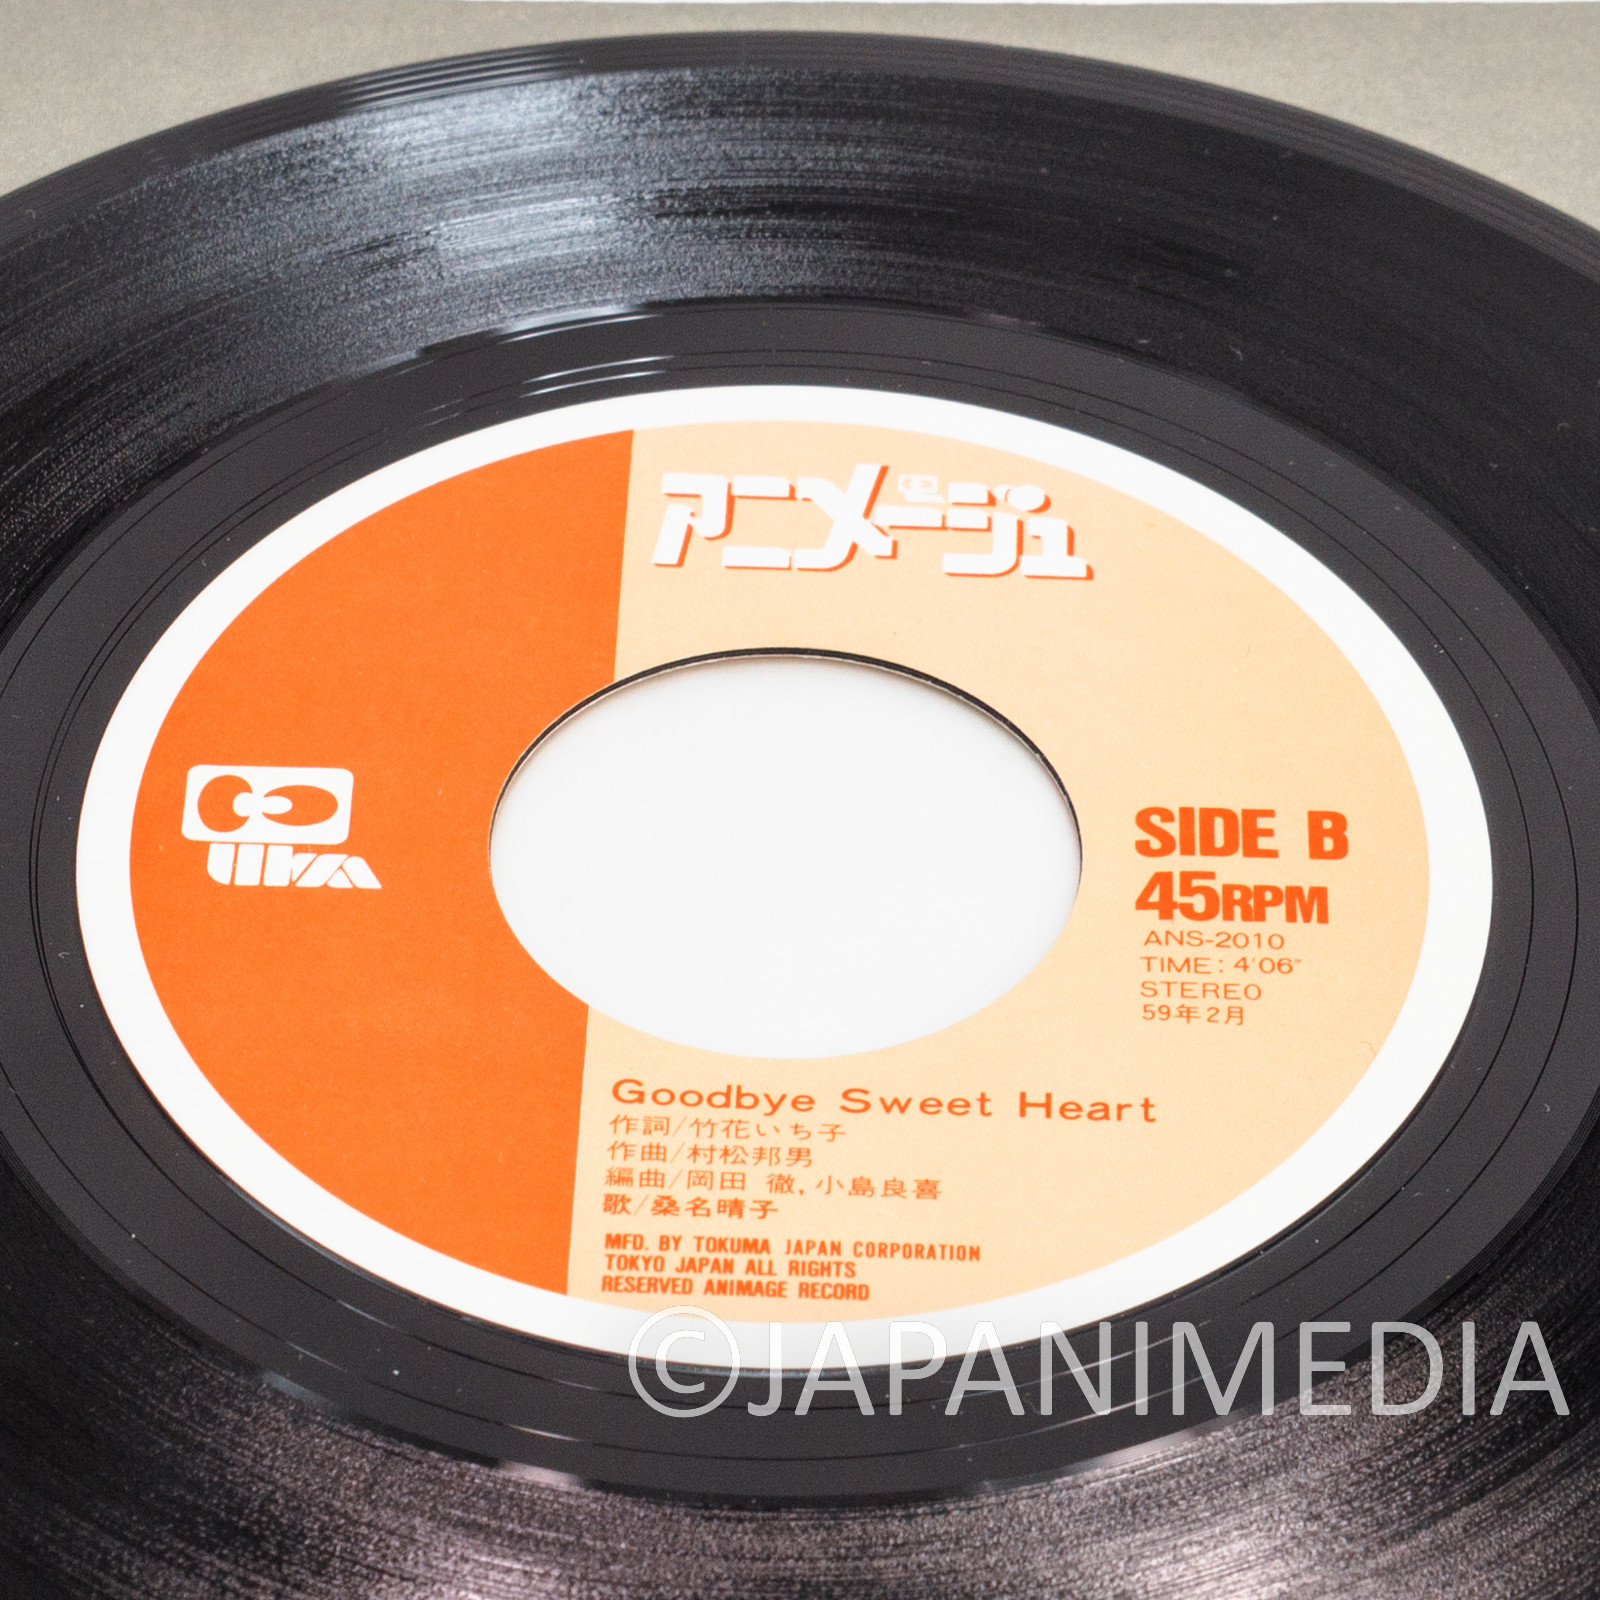 Sherlock Hound Detective Holmes Movie Theme Song Boken no Alibi Vinyl EP Record